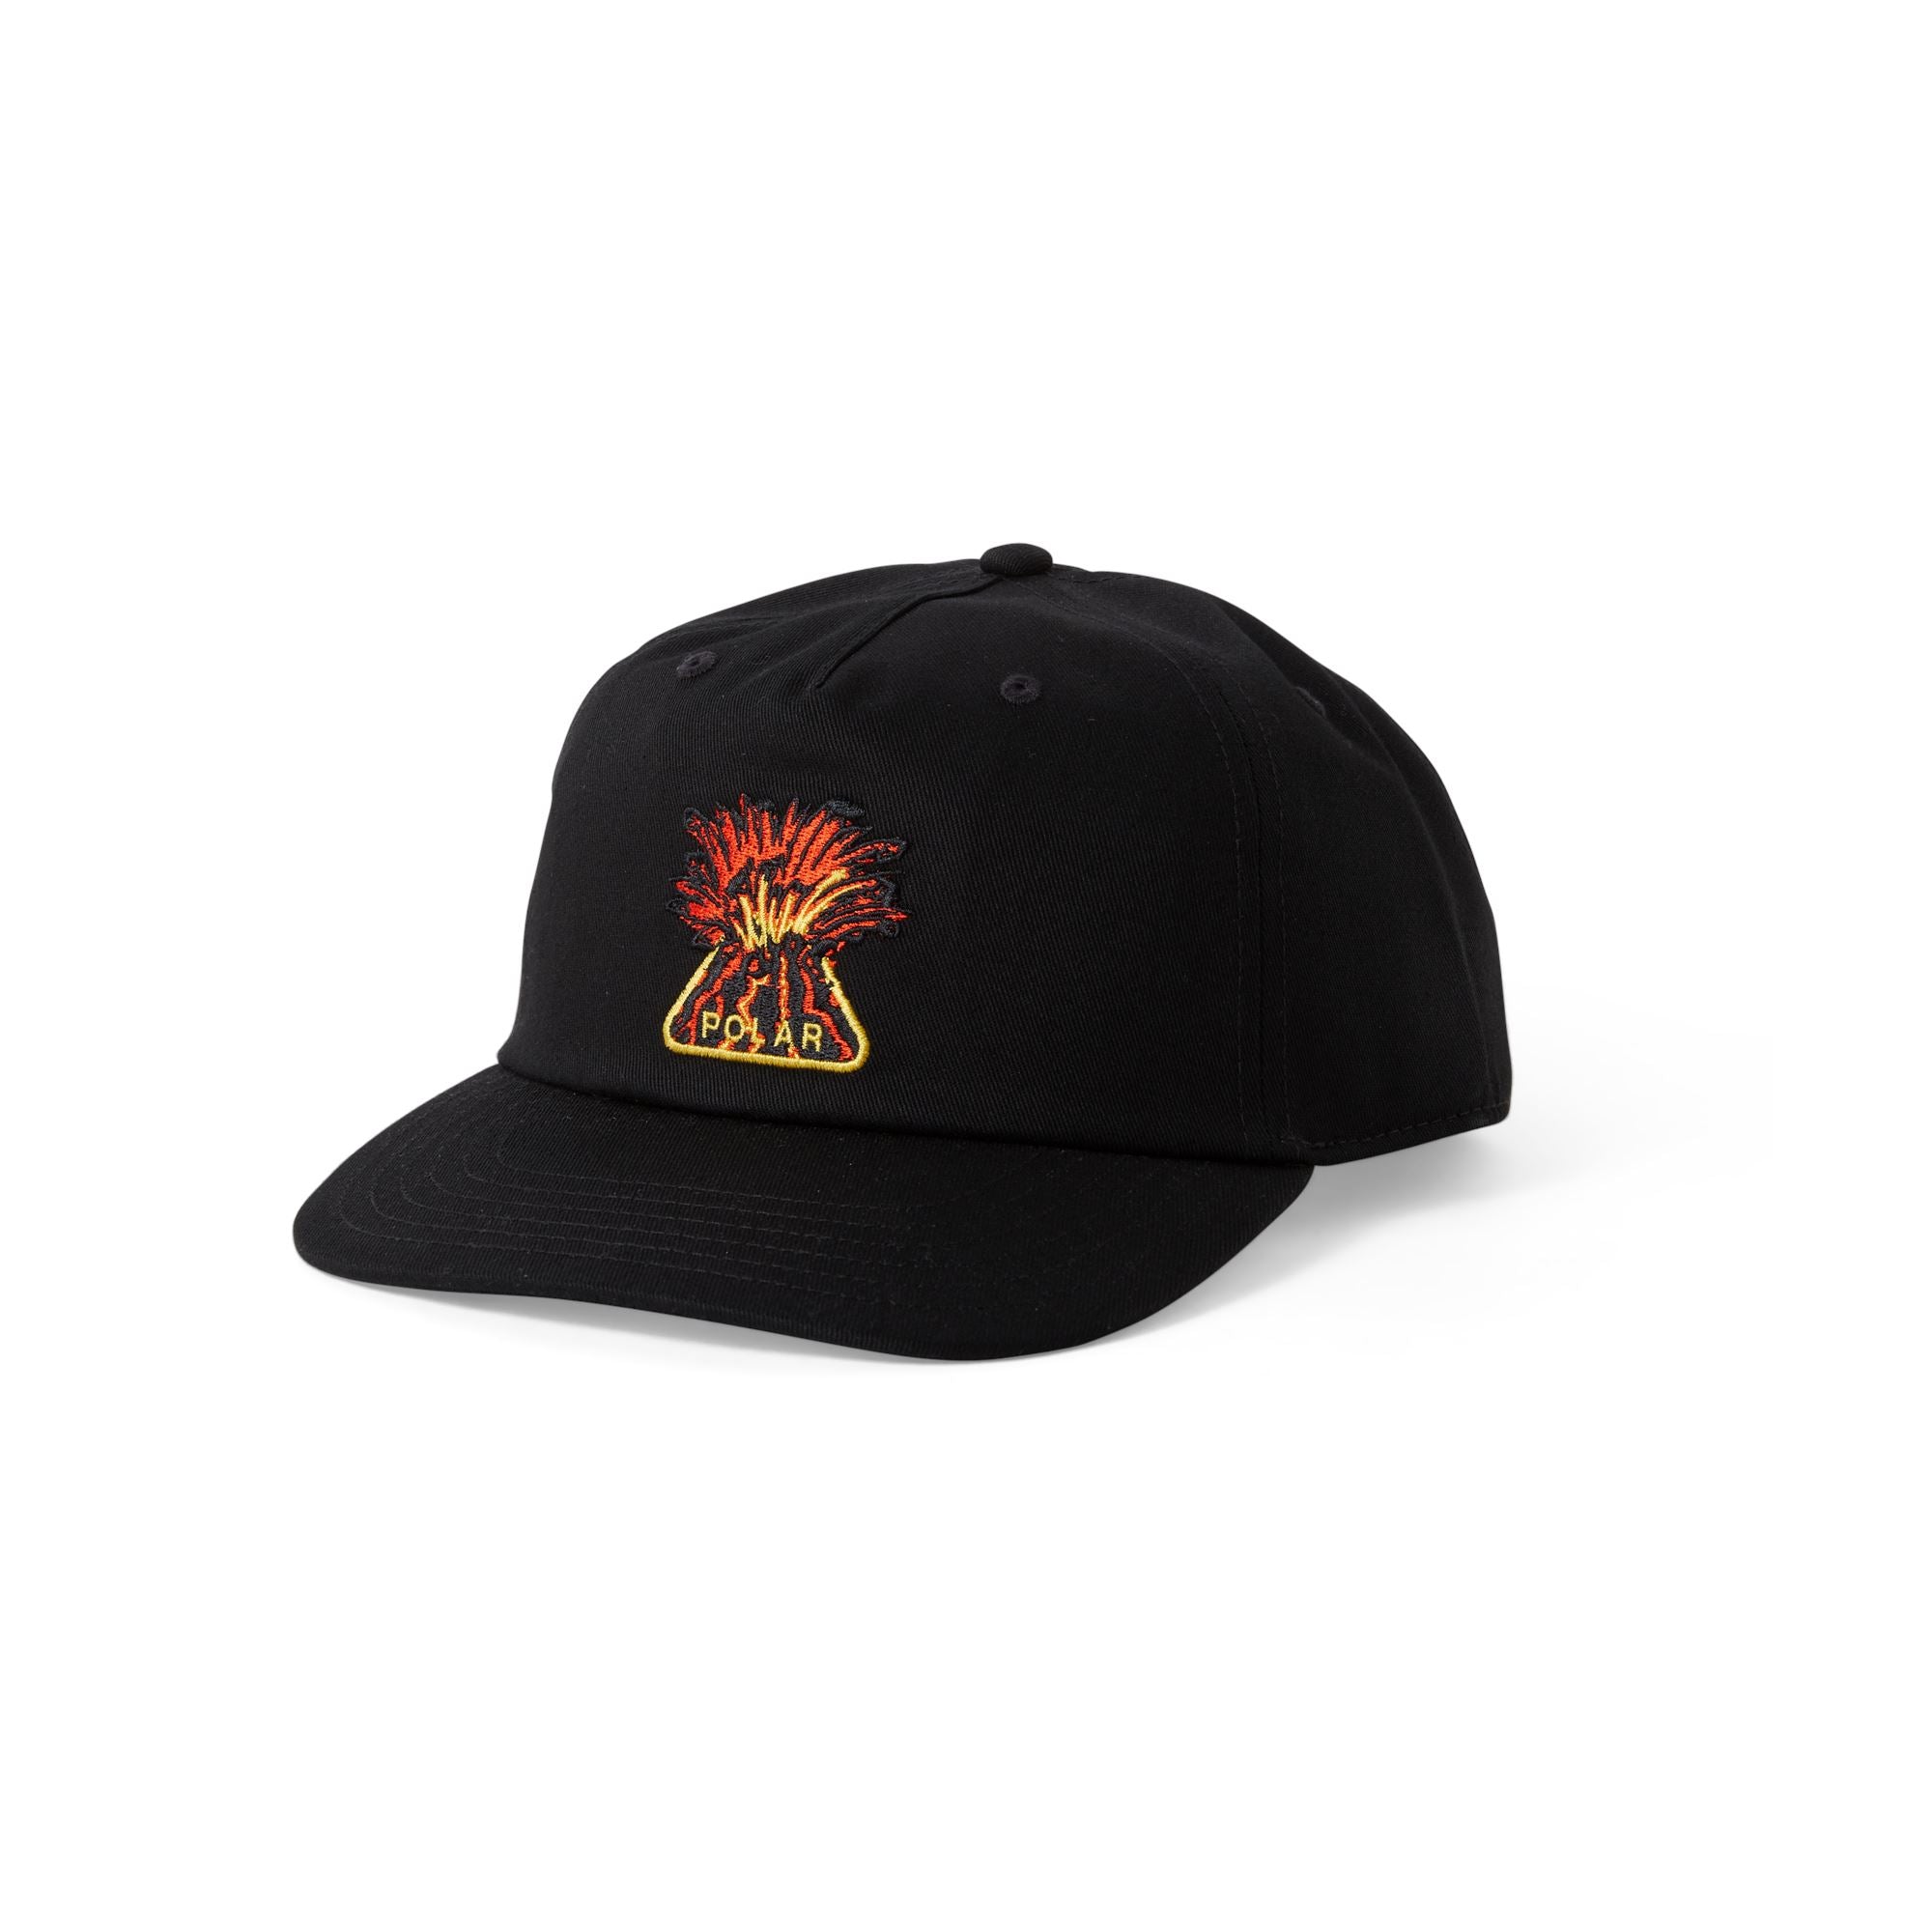 Polar Jake Cap Volcano Twill Black hats Polar Skate Co 